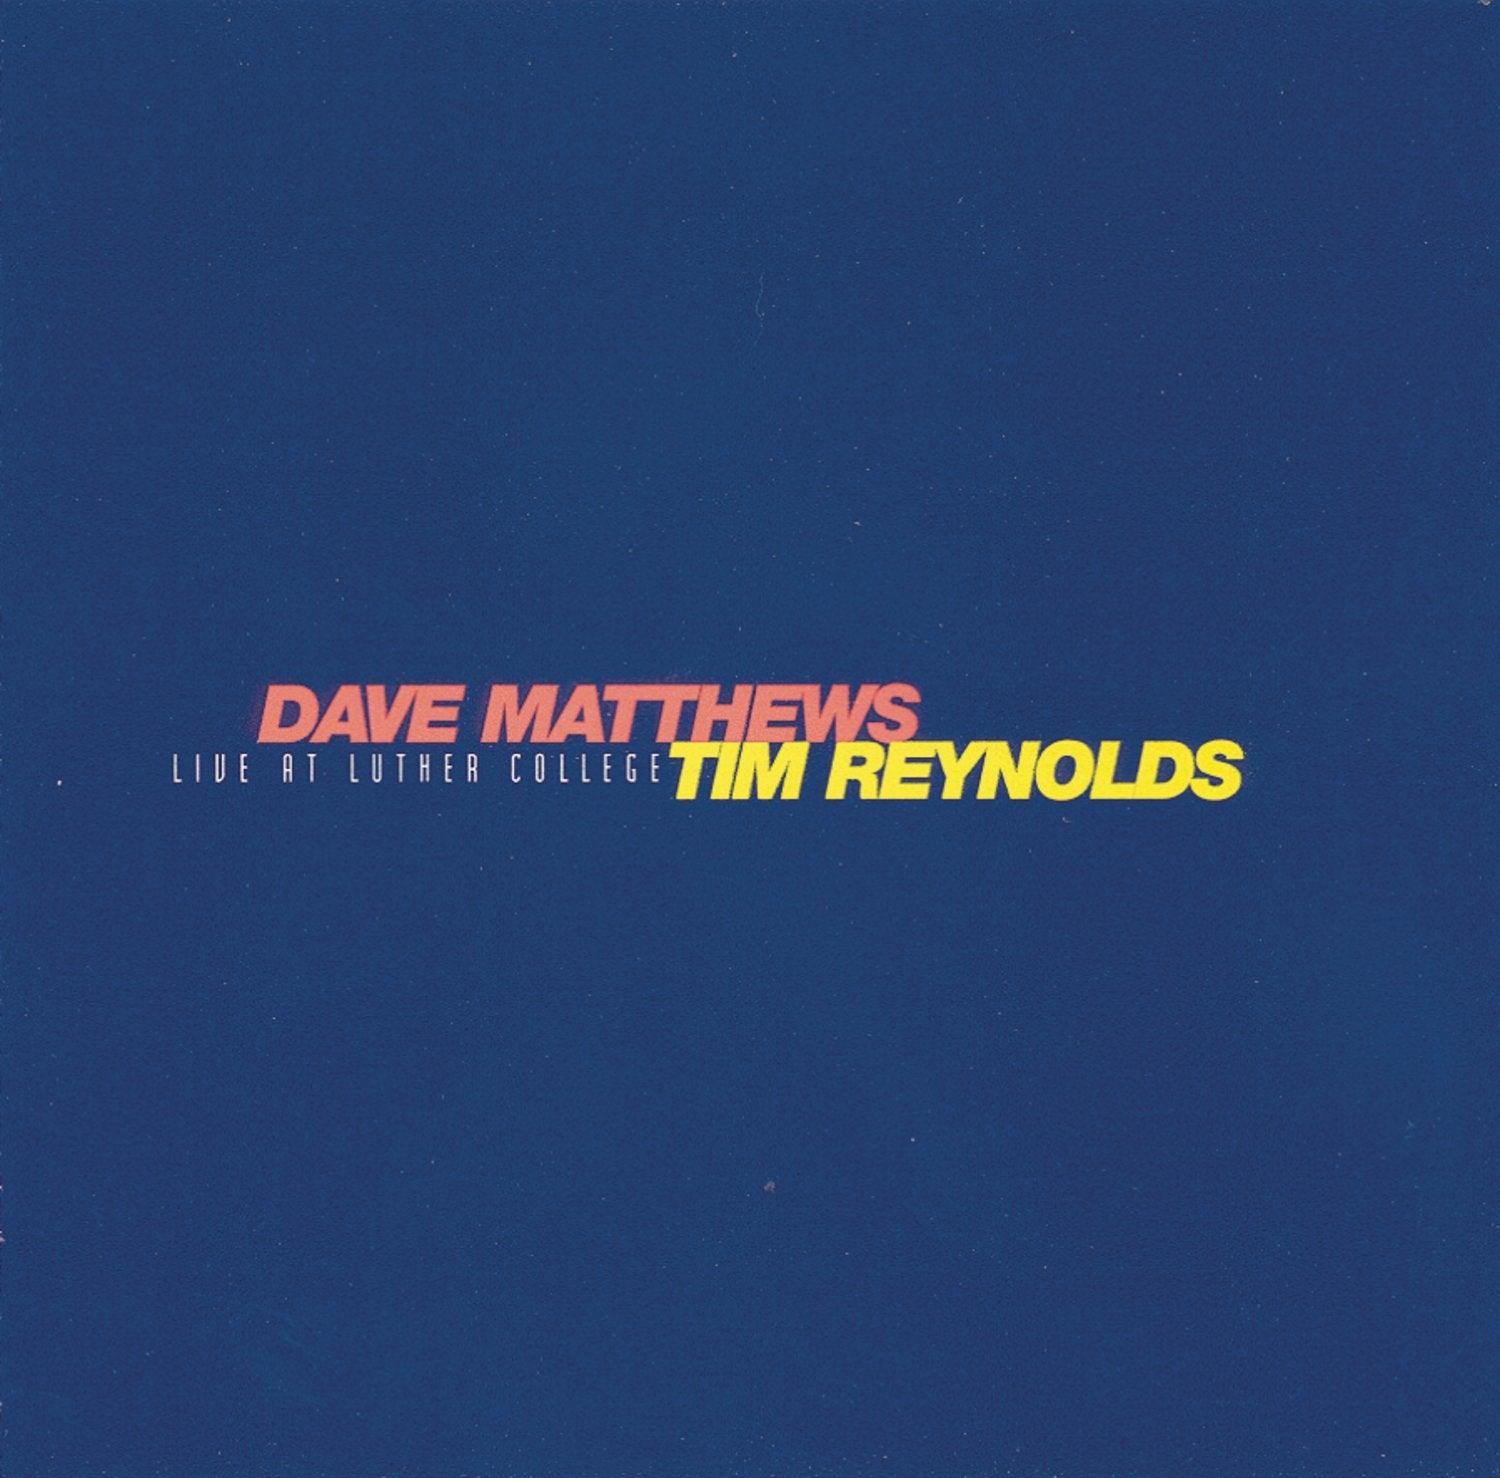 Dave Matthews & Tim Reynolds- Live At Luther College - Darkside Records